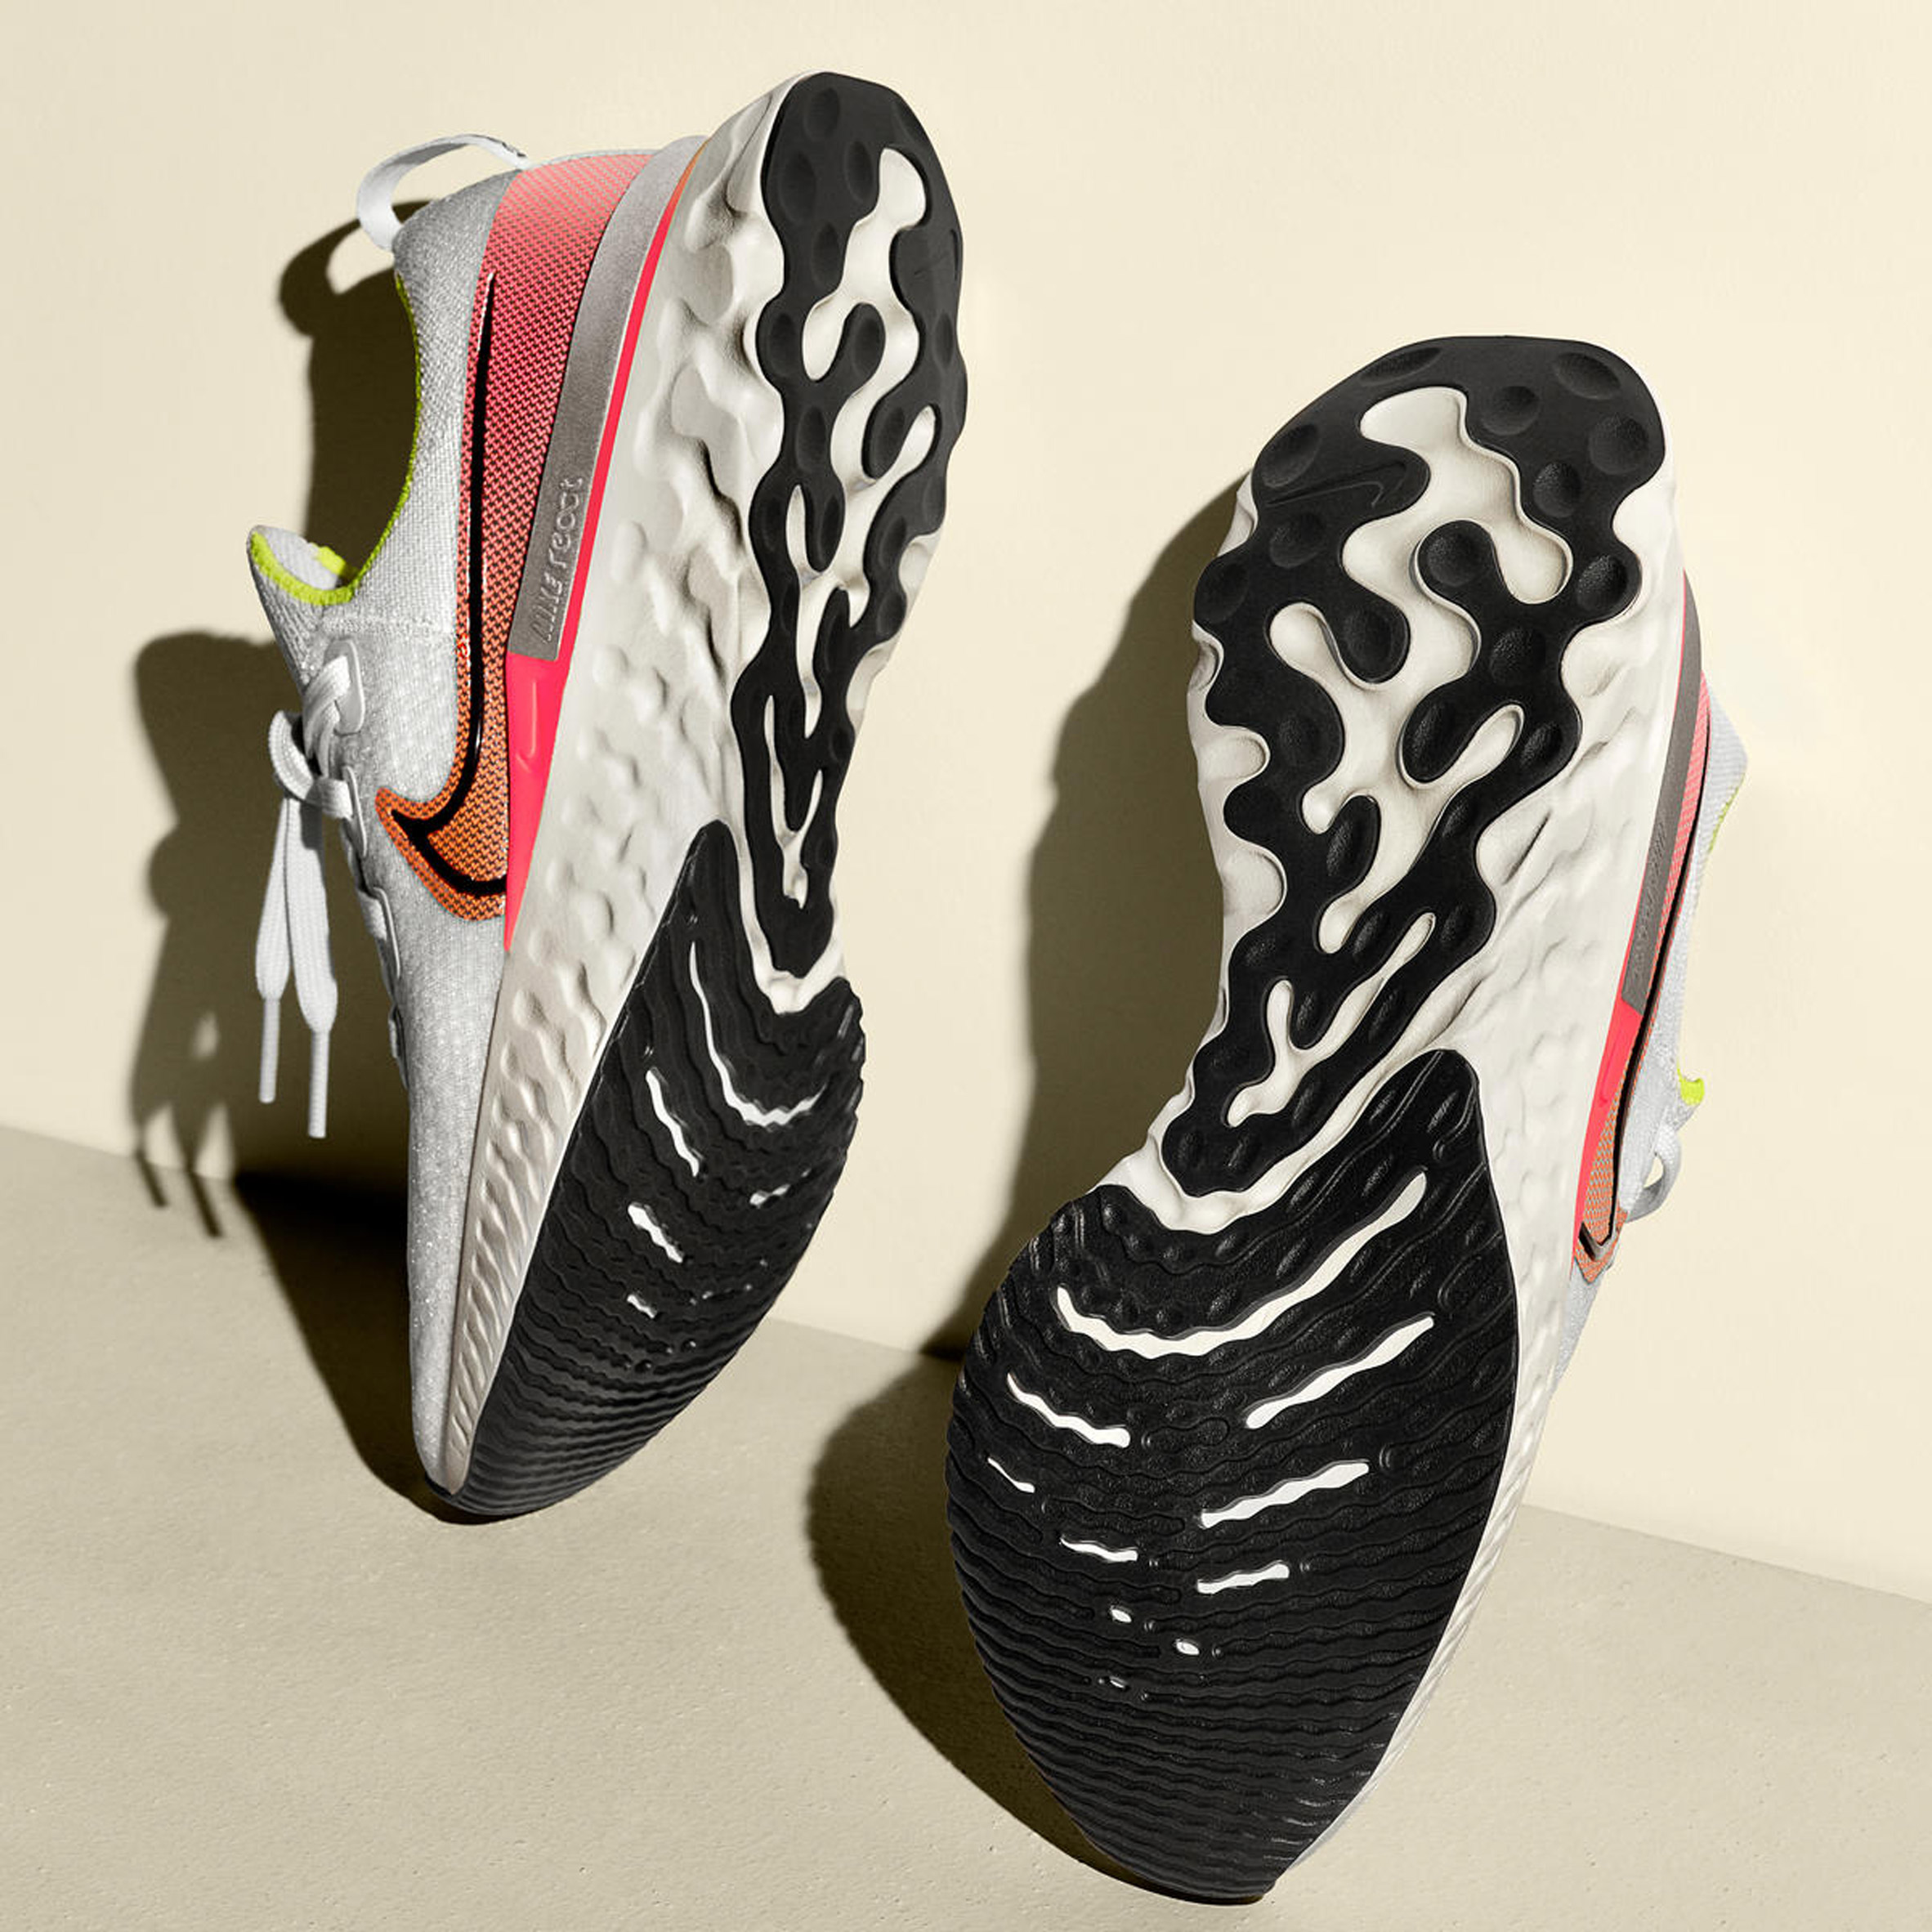 Nike React Infinity Run is designed to 